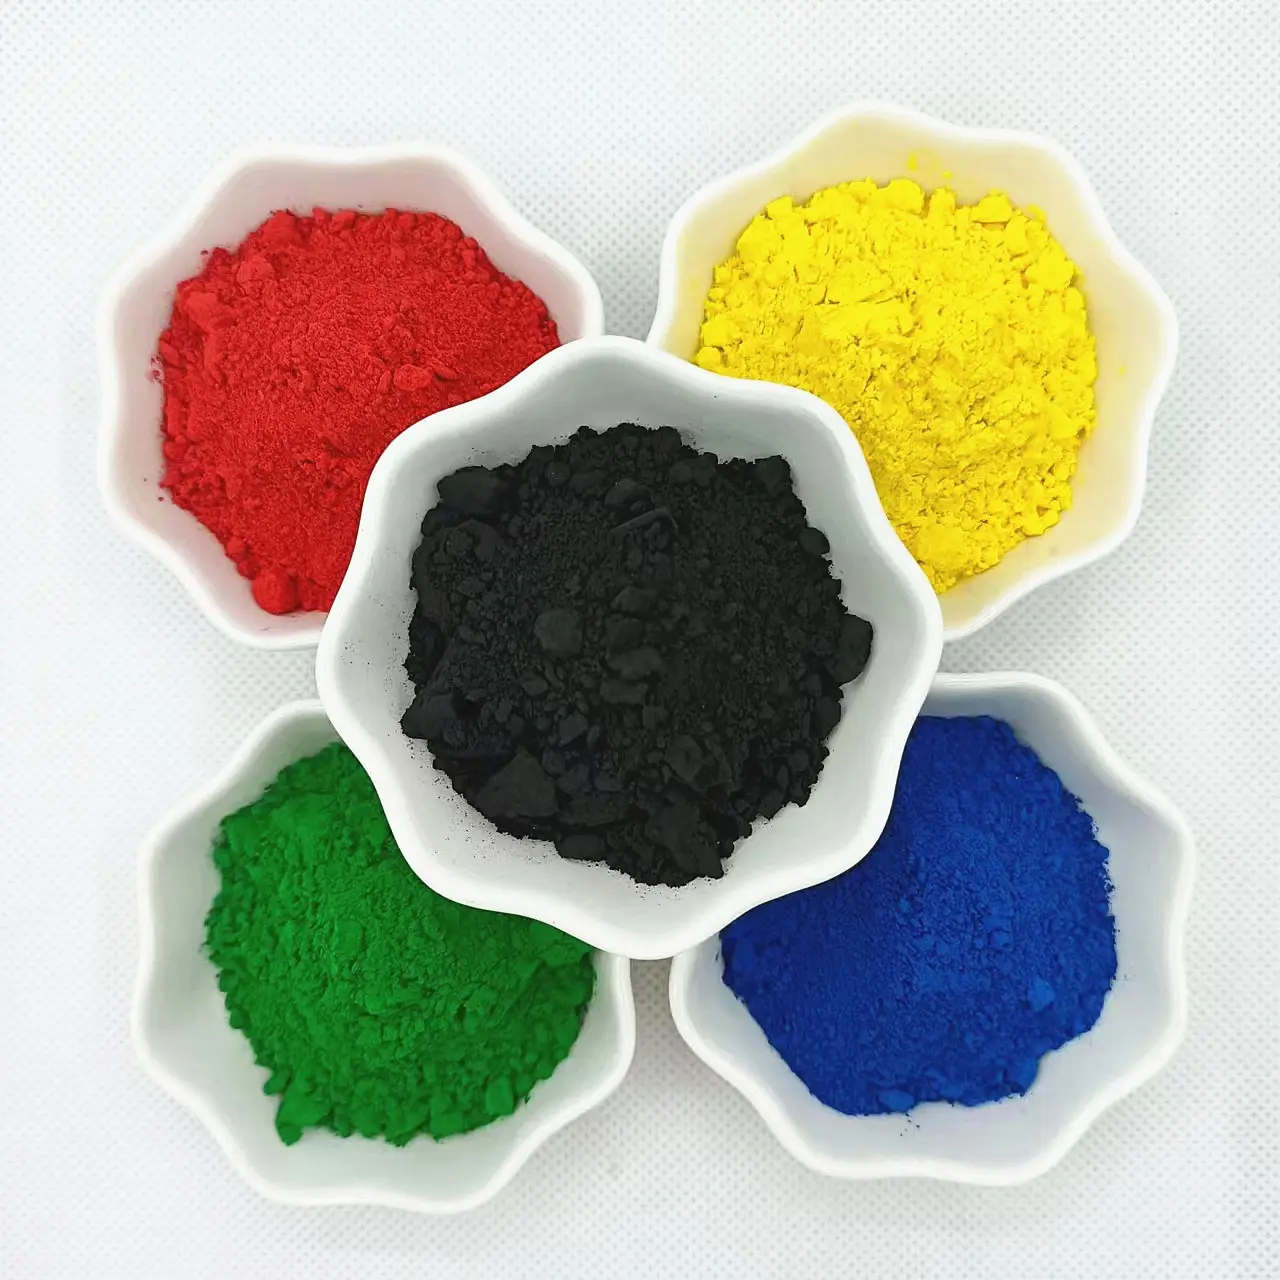 Mavi demir oksit pigmenti boya kaplama kauçuk pist zemin malzemesi tonlama pigment